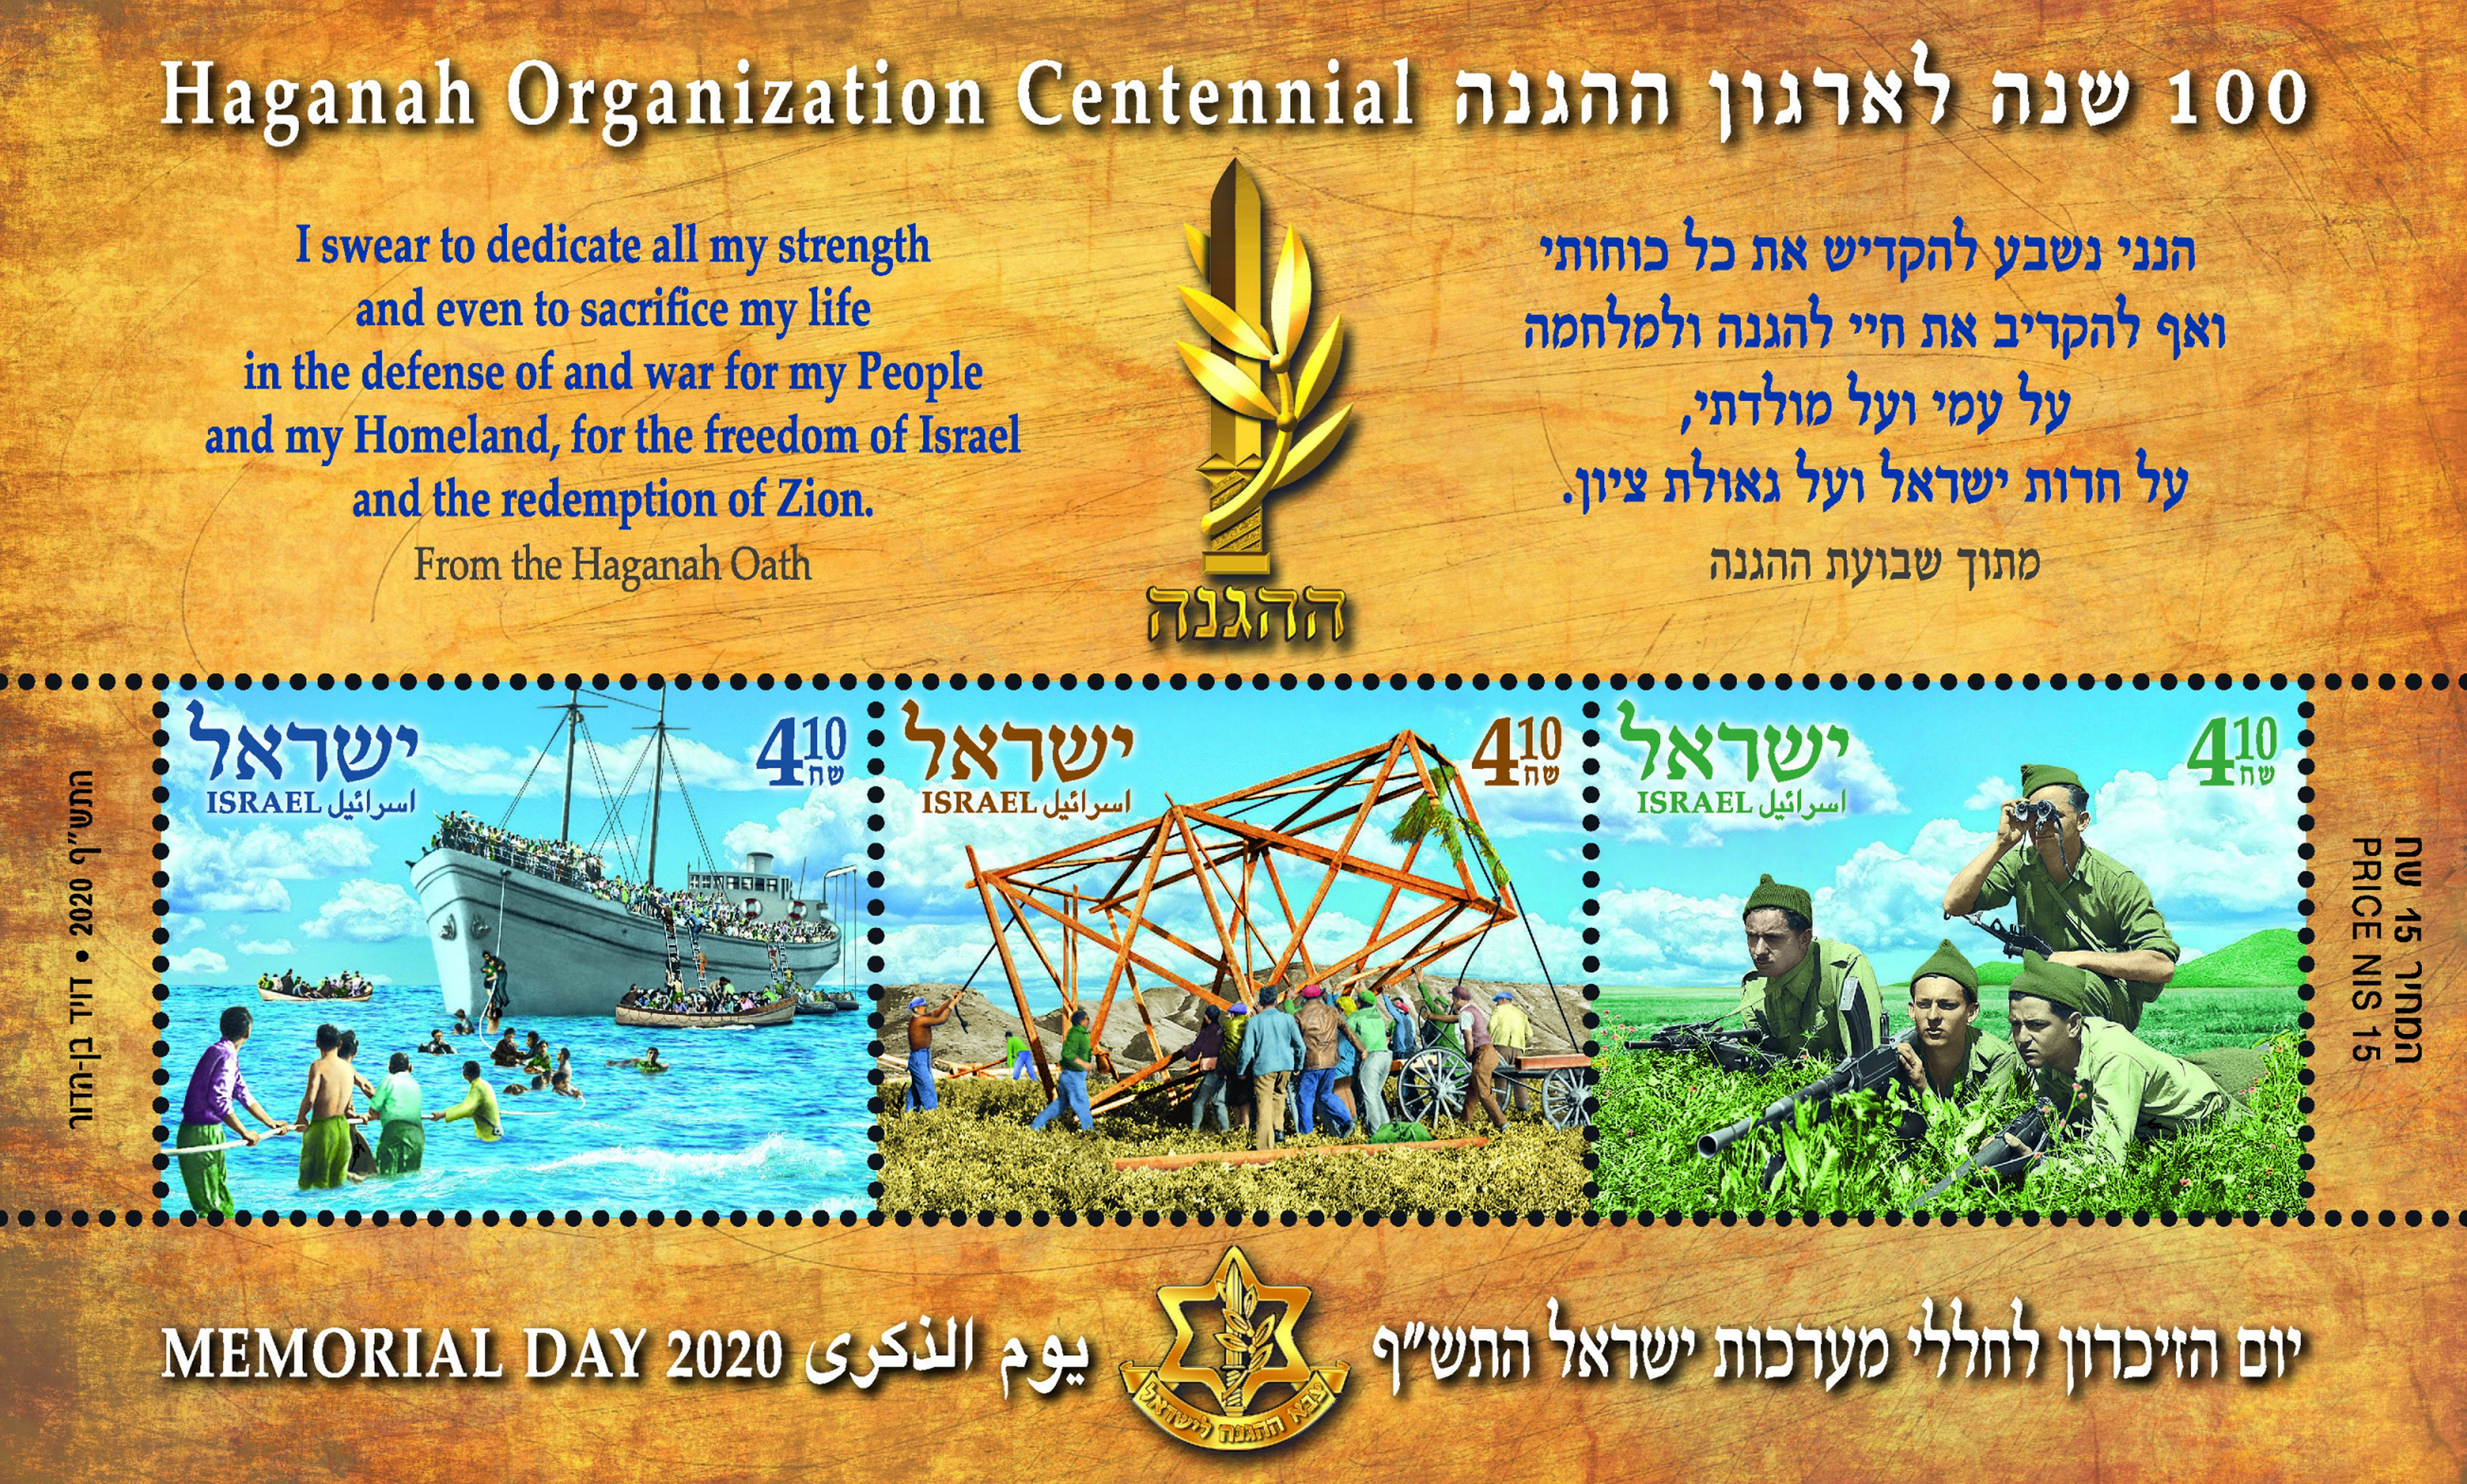 Haganah Organization Centennial